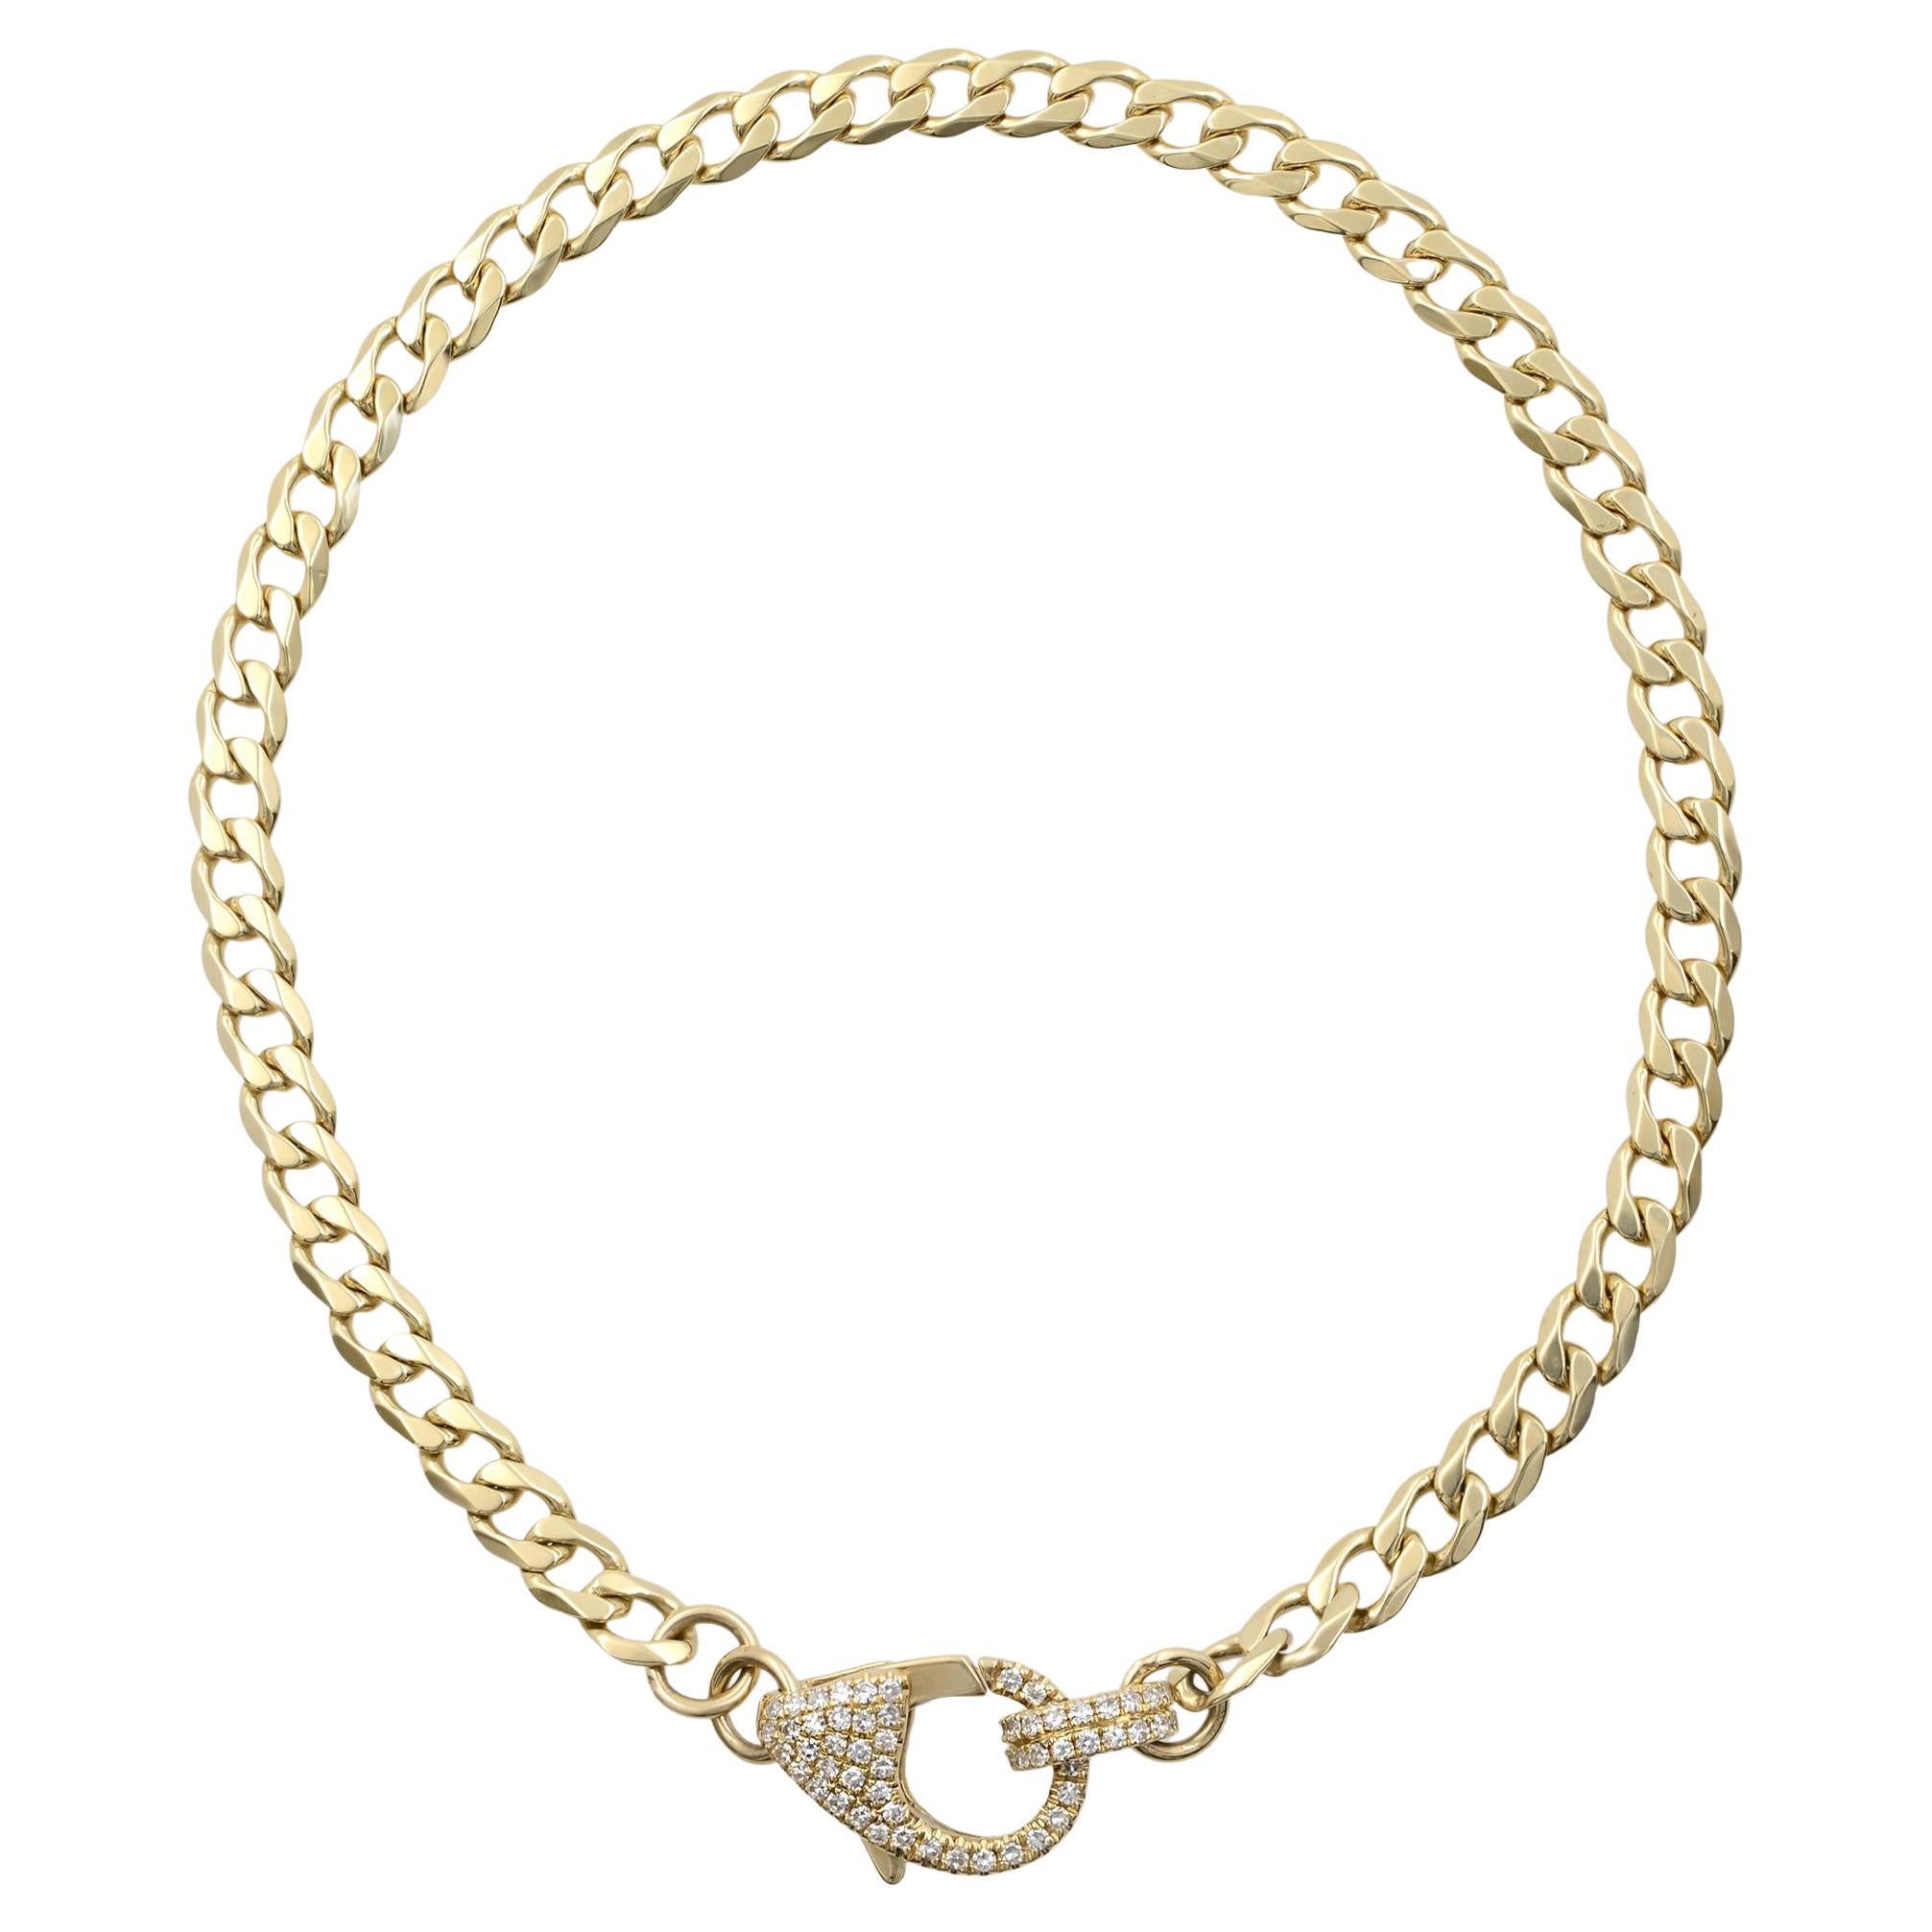 Rachel Koen Diamond Link Chain Bracelet 14K Yellow Gold 0.25Cttw 7 Inches